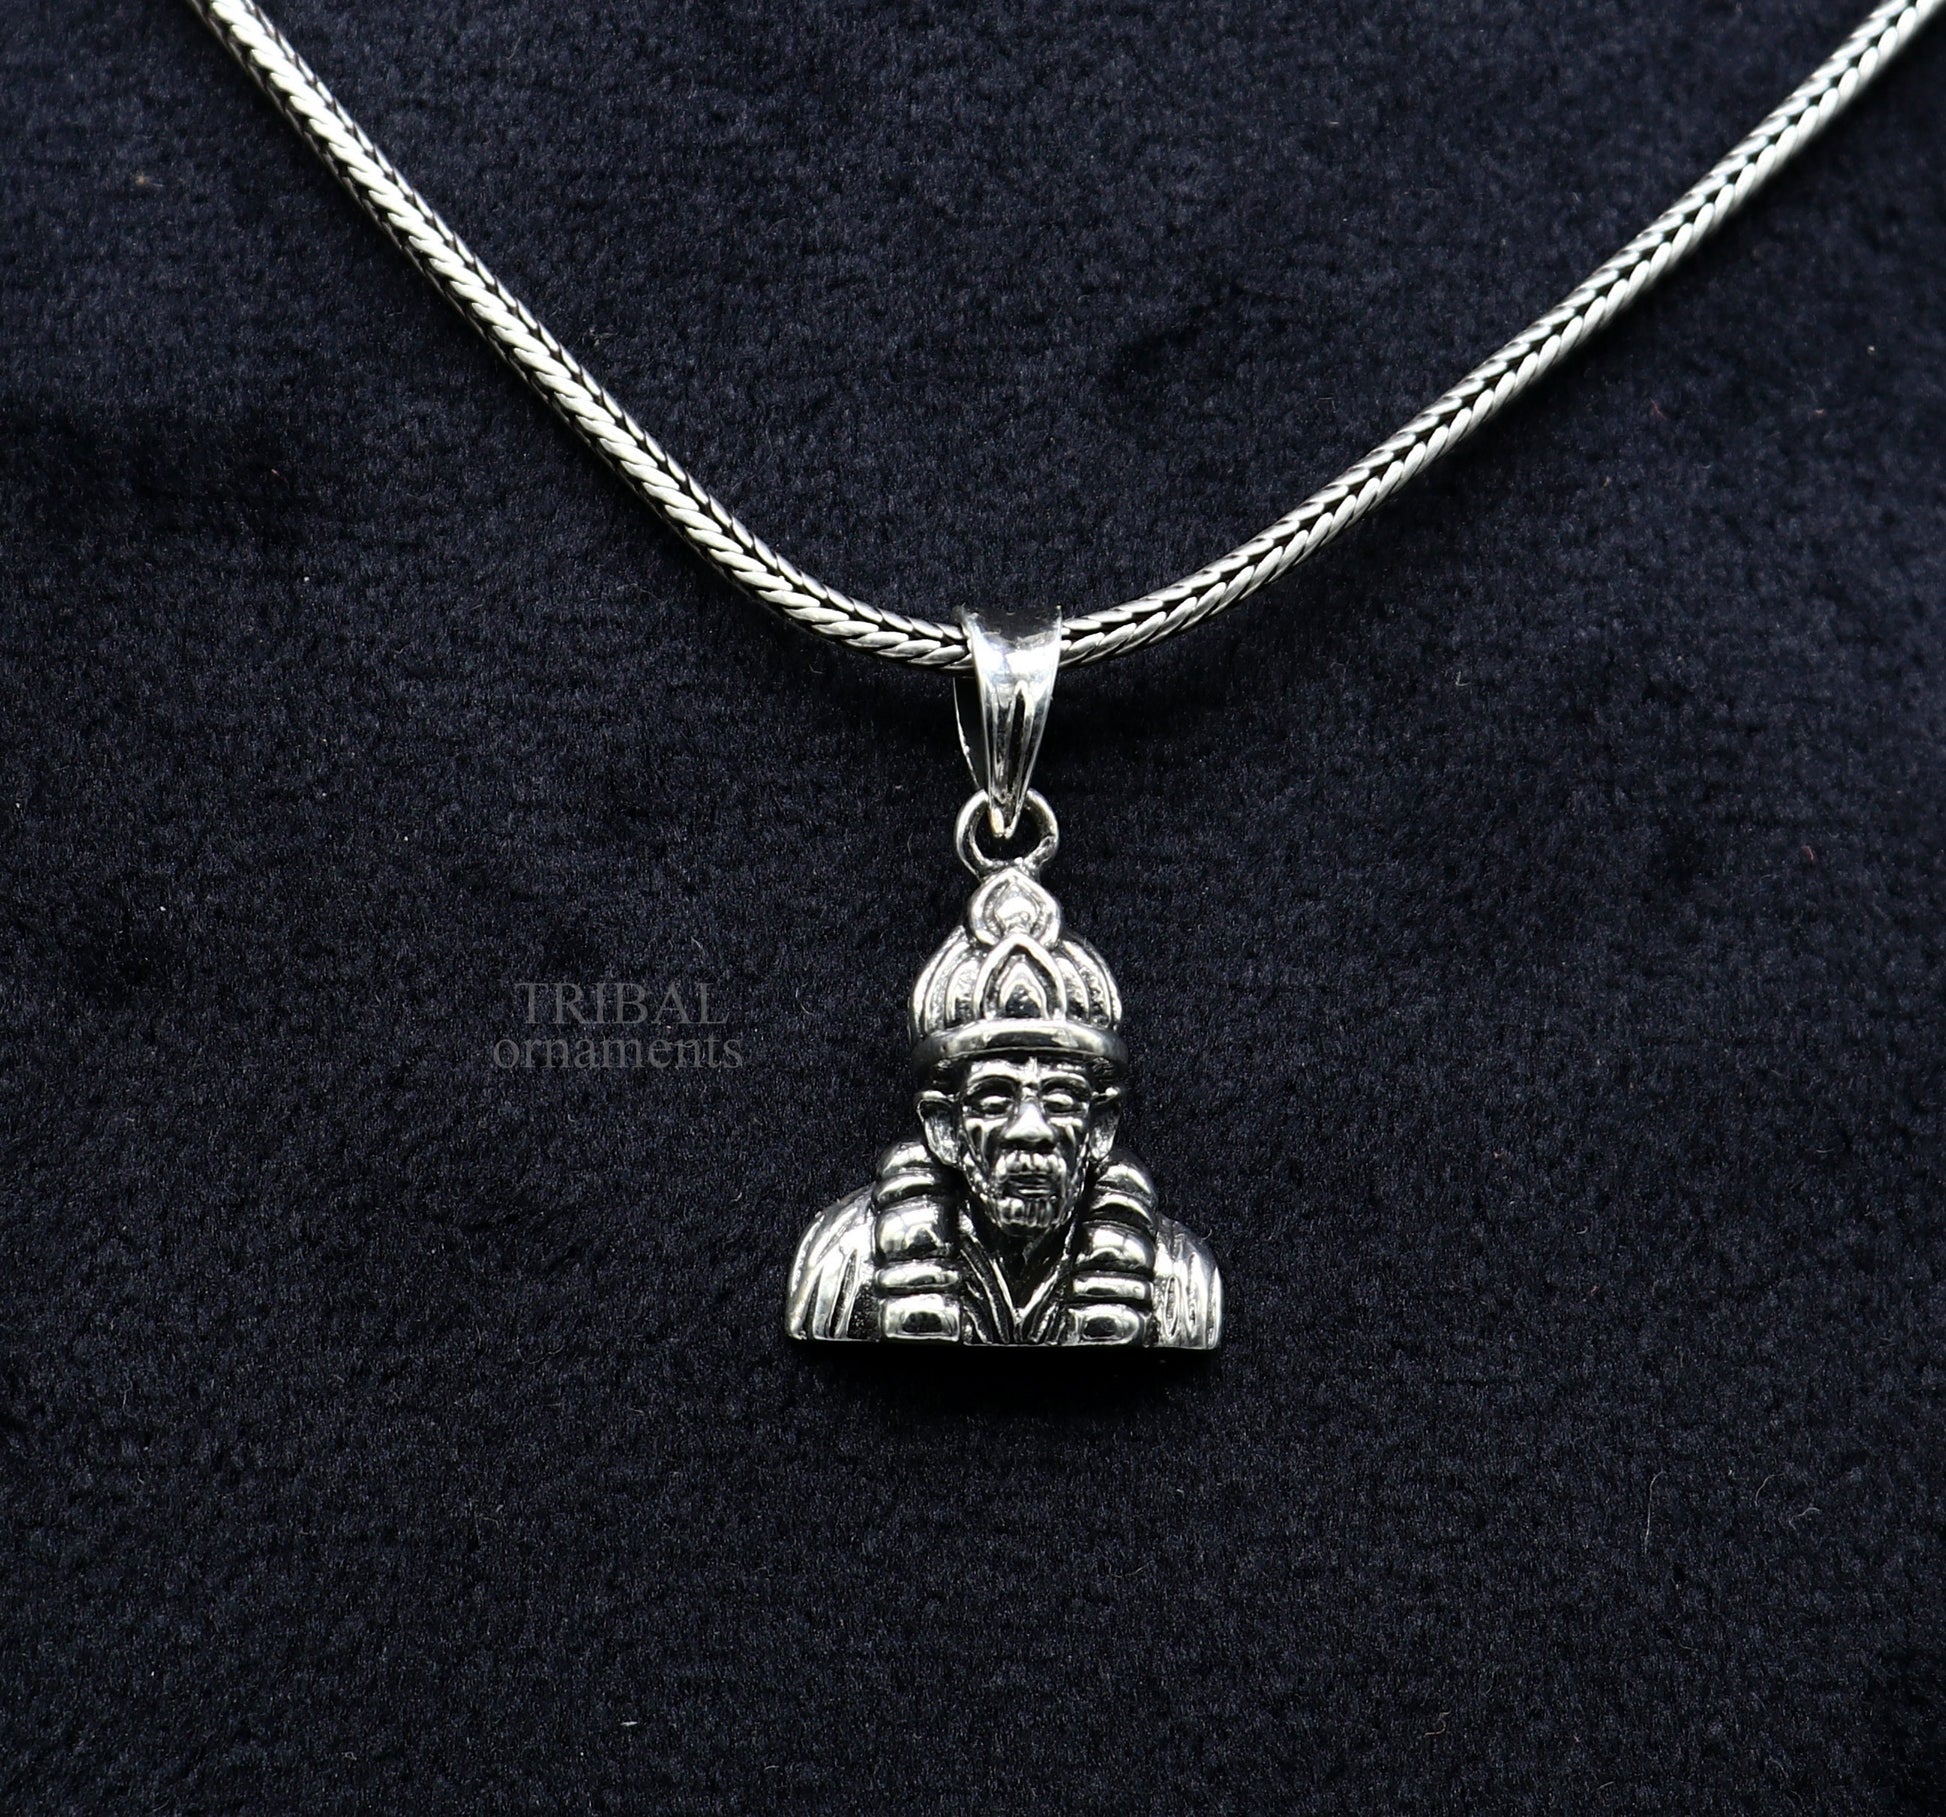 925 sterling silver handmade Indian idol Sai Baba pendant, amazing stylish unisex pendant locket personalized jewelry tribal jewelry ssp1703 - TRIBAL ORNAMENTS